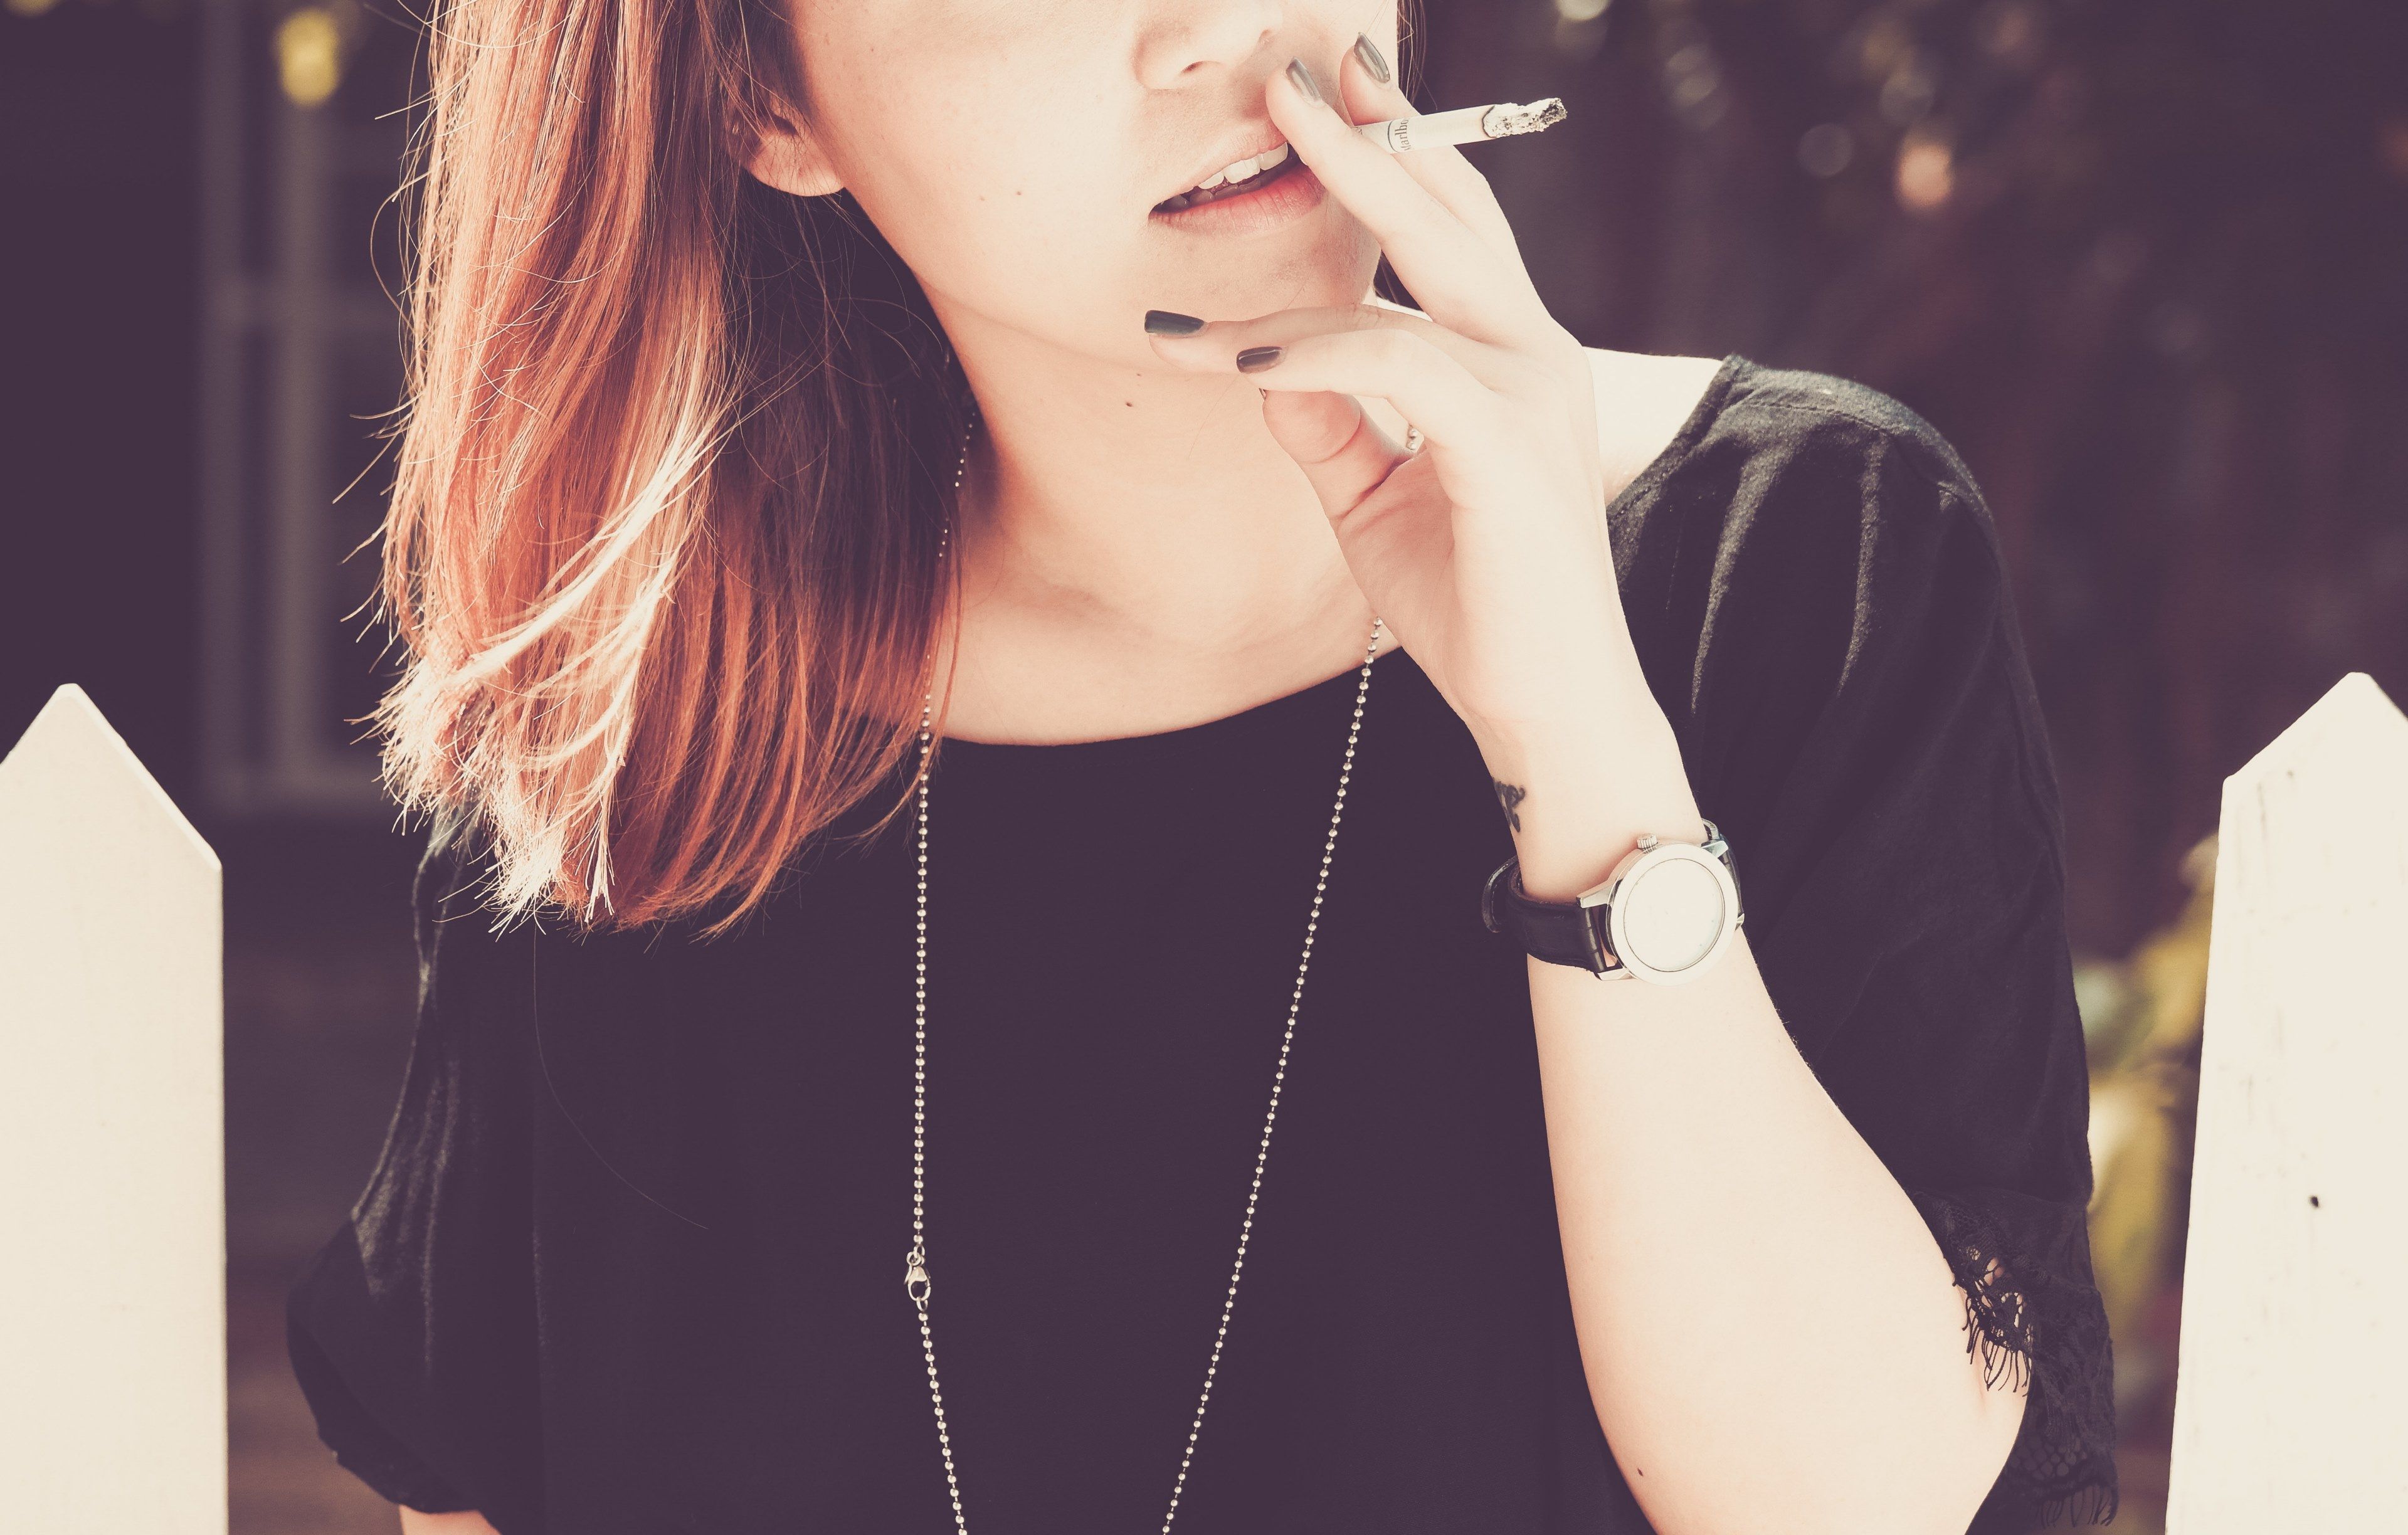 young woman smoking a cigarette outsidebad habits 4k wallpaper